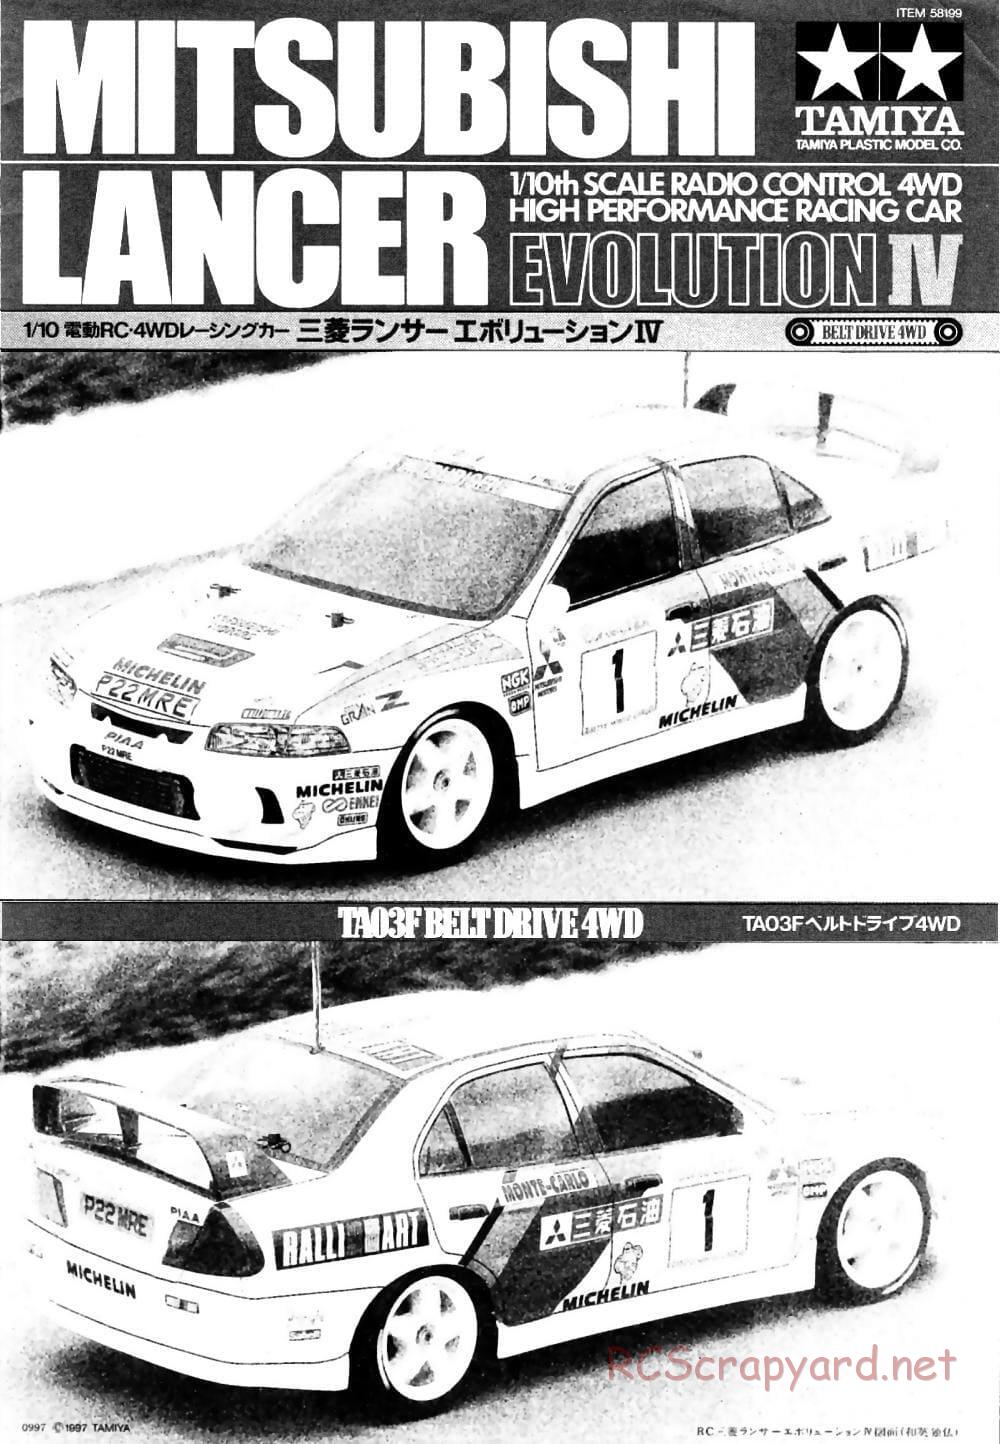 Tamiya - Mitsubishi Lancer Evolution IV - TA-03F Chassis - Manual - Page 1